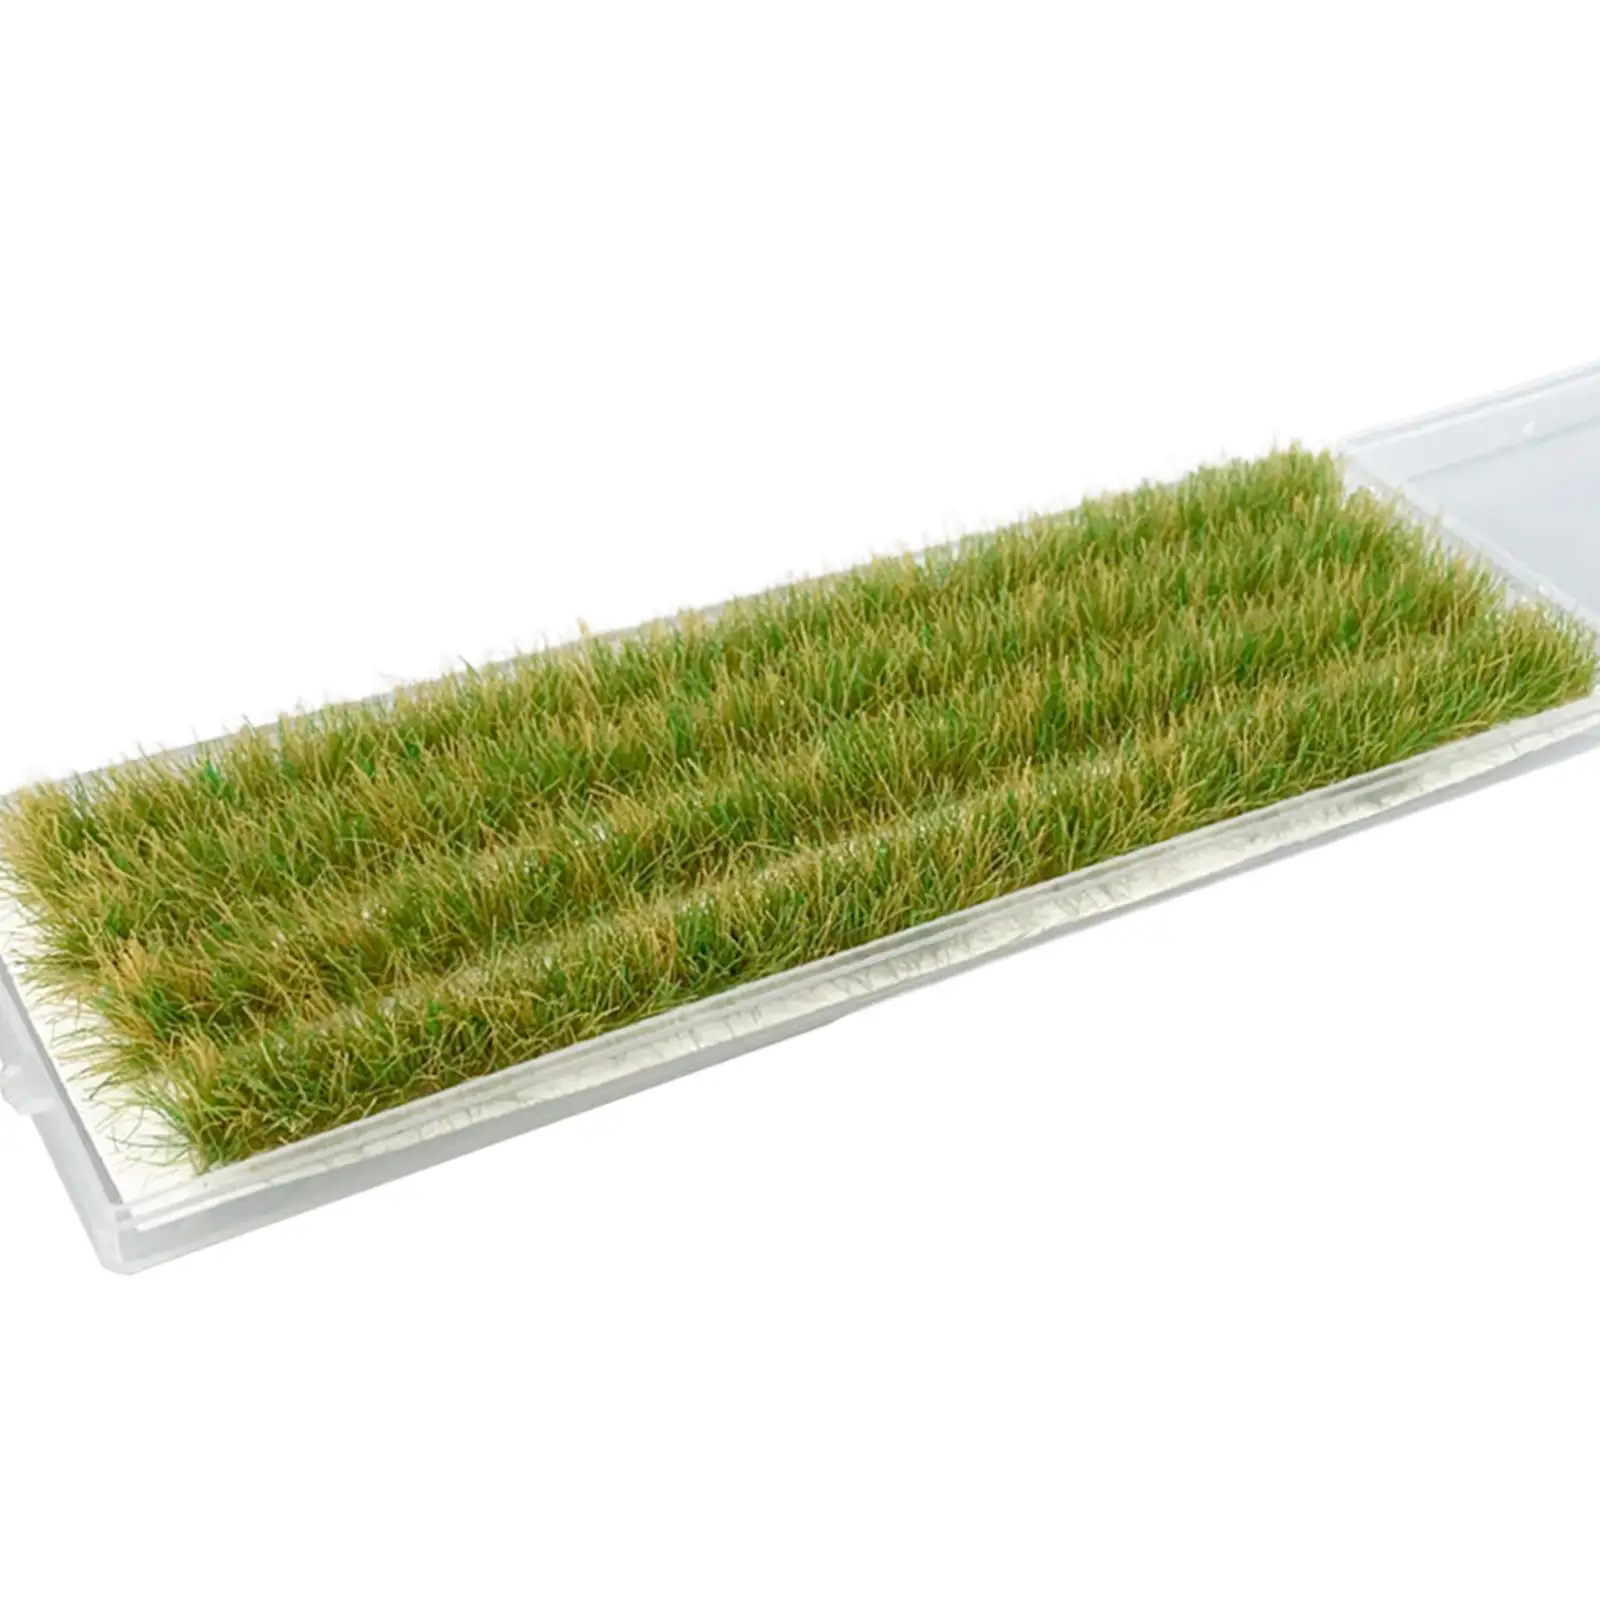 1/87 Scale HO Grass Miniature Grass Strips Model Ornament Scenery Supplies Lowland Craft Bushy Tuft Terrain Model for Landscape